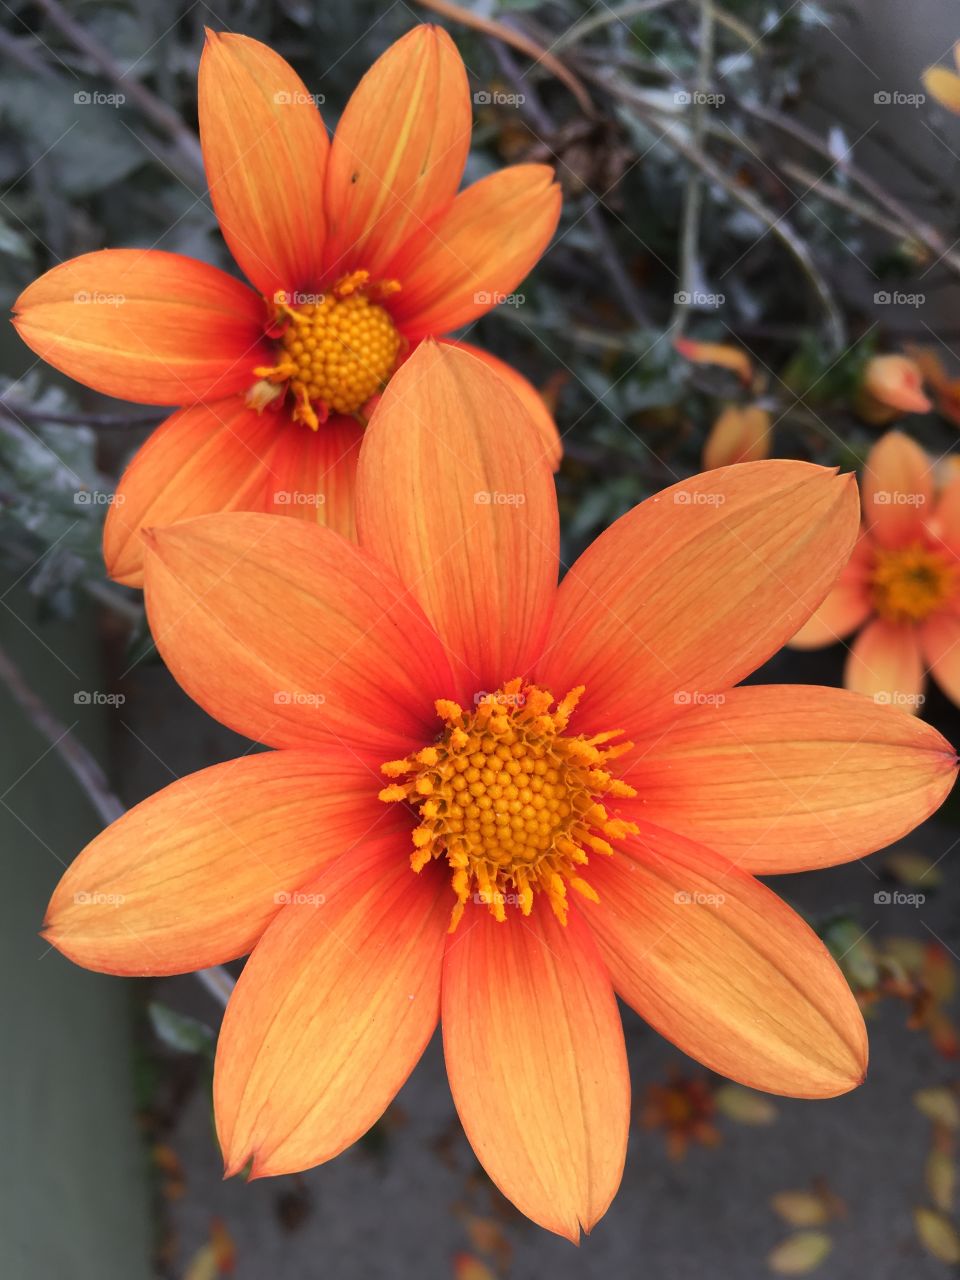 Bright orange flowers 